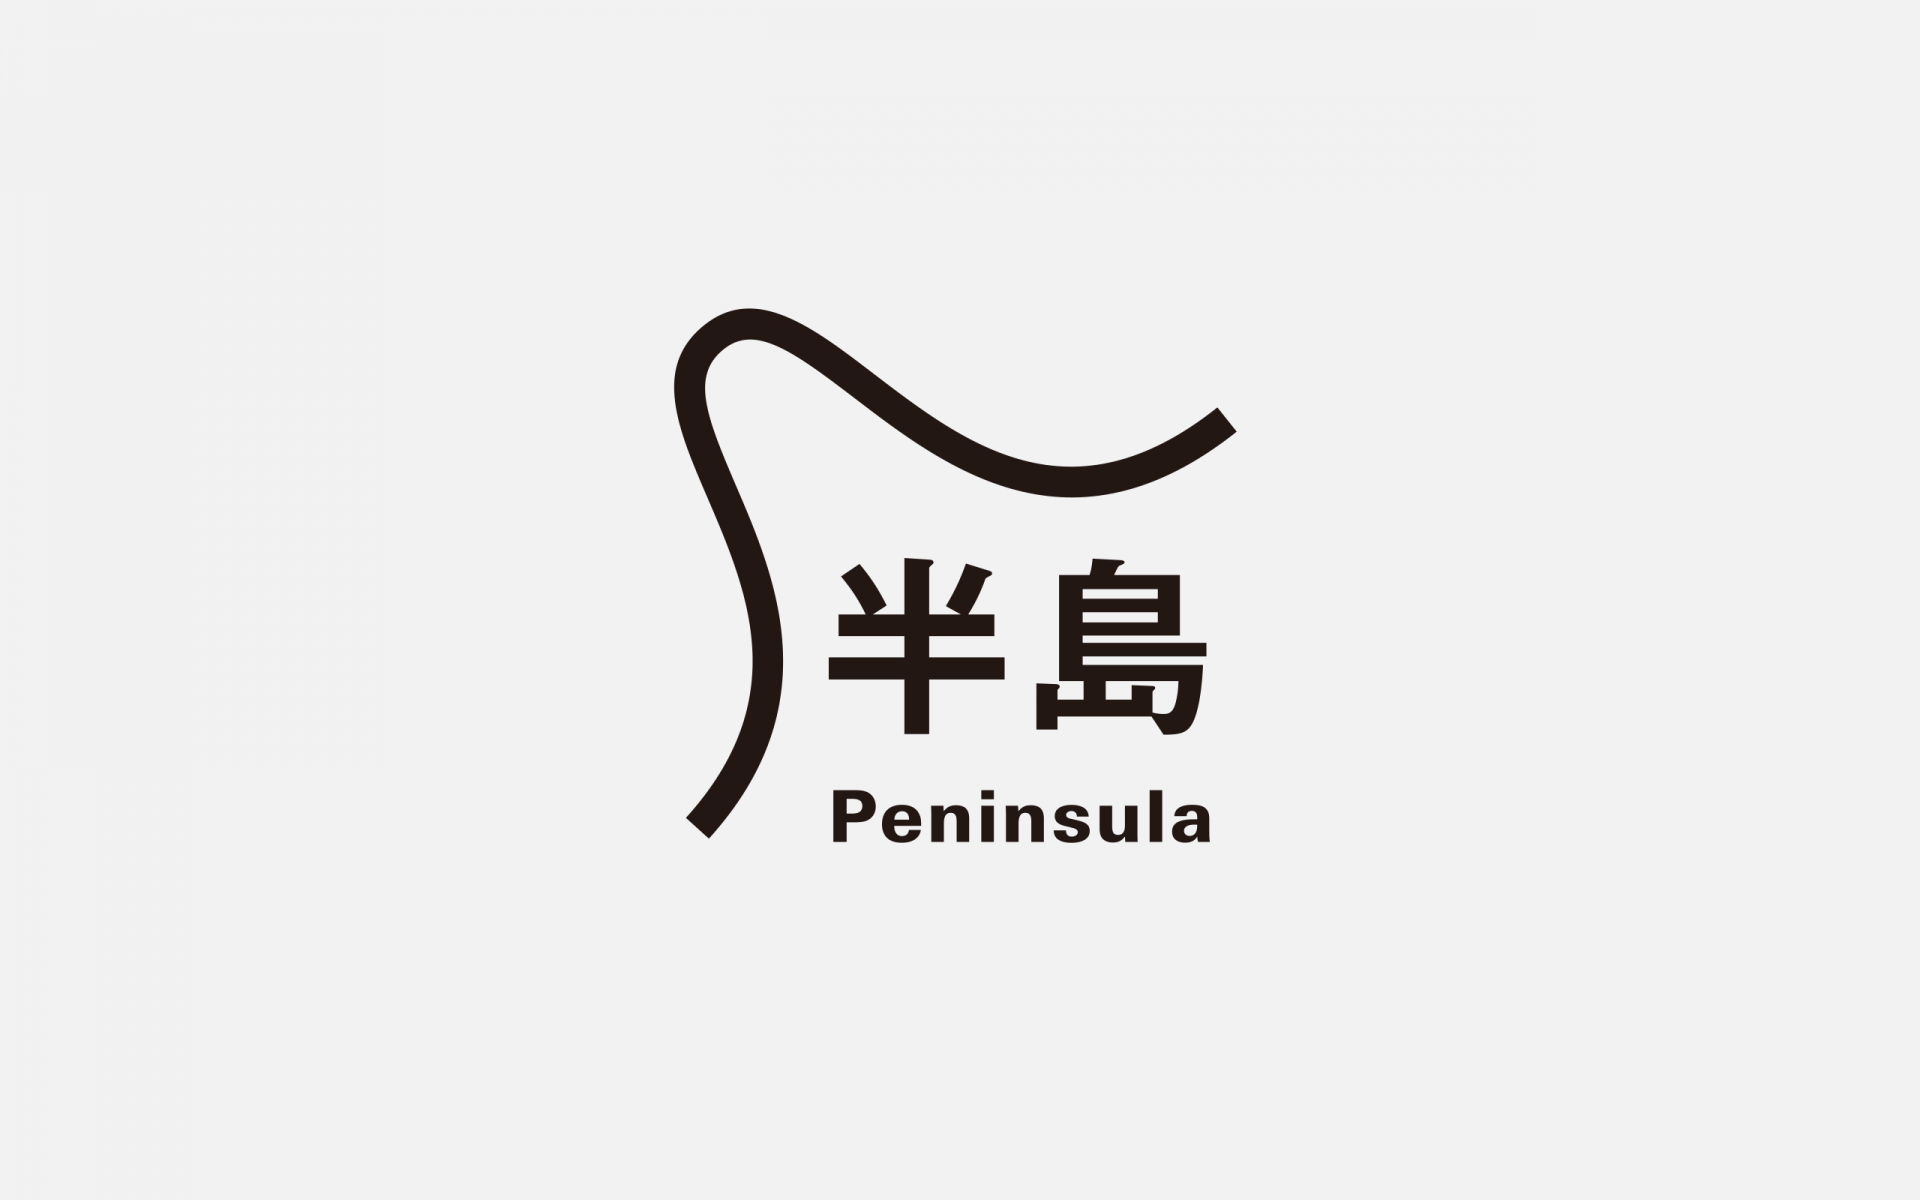 Peninsula Time